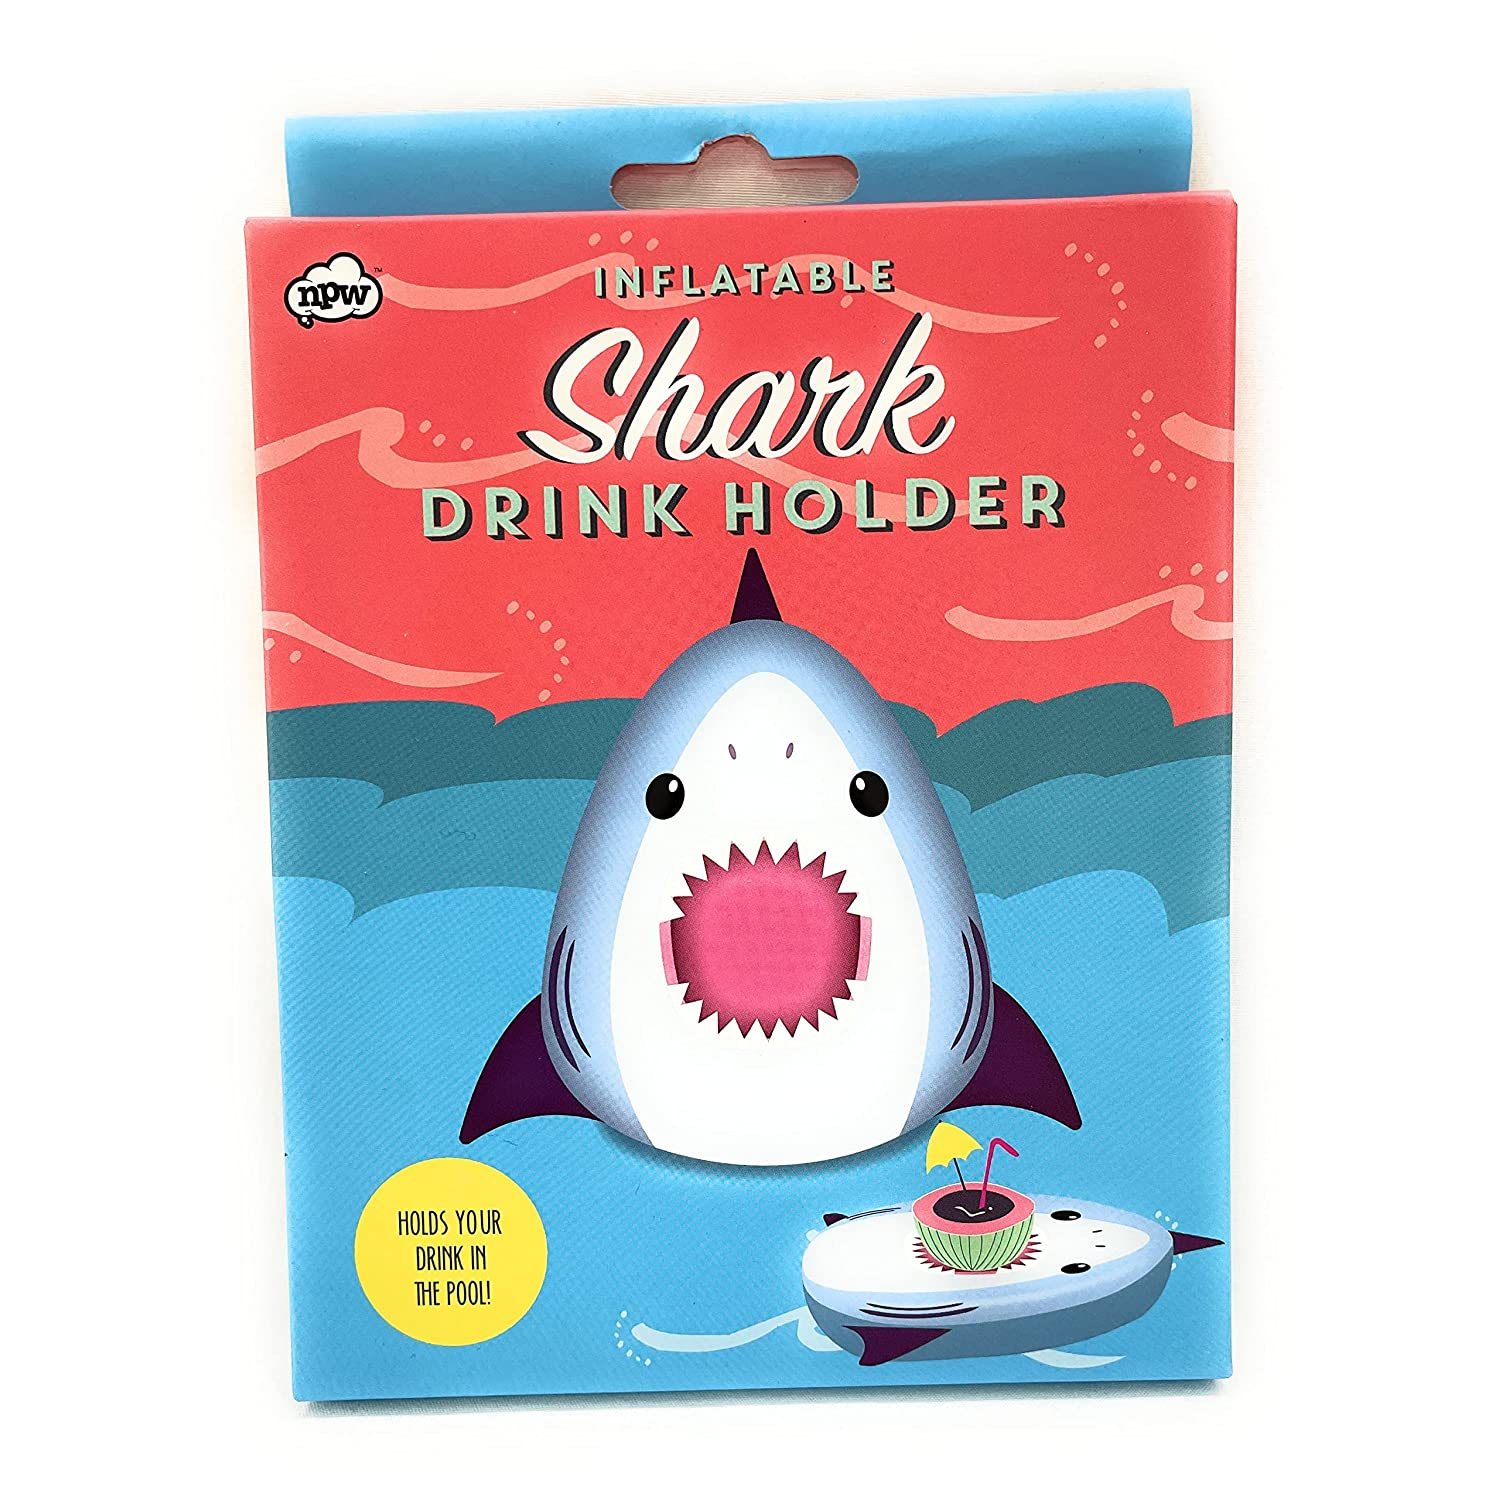 Inflatable Shark Pool Drink Holder